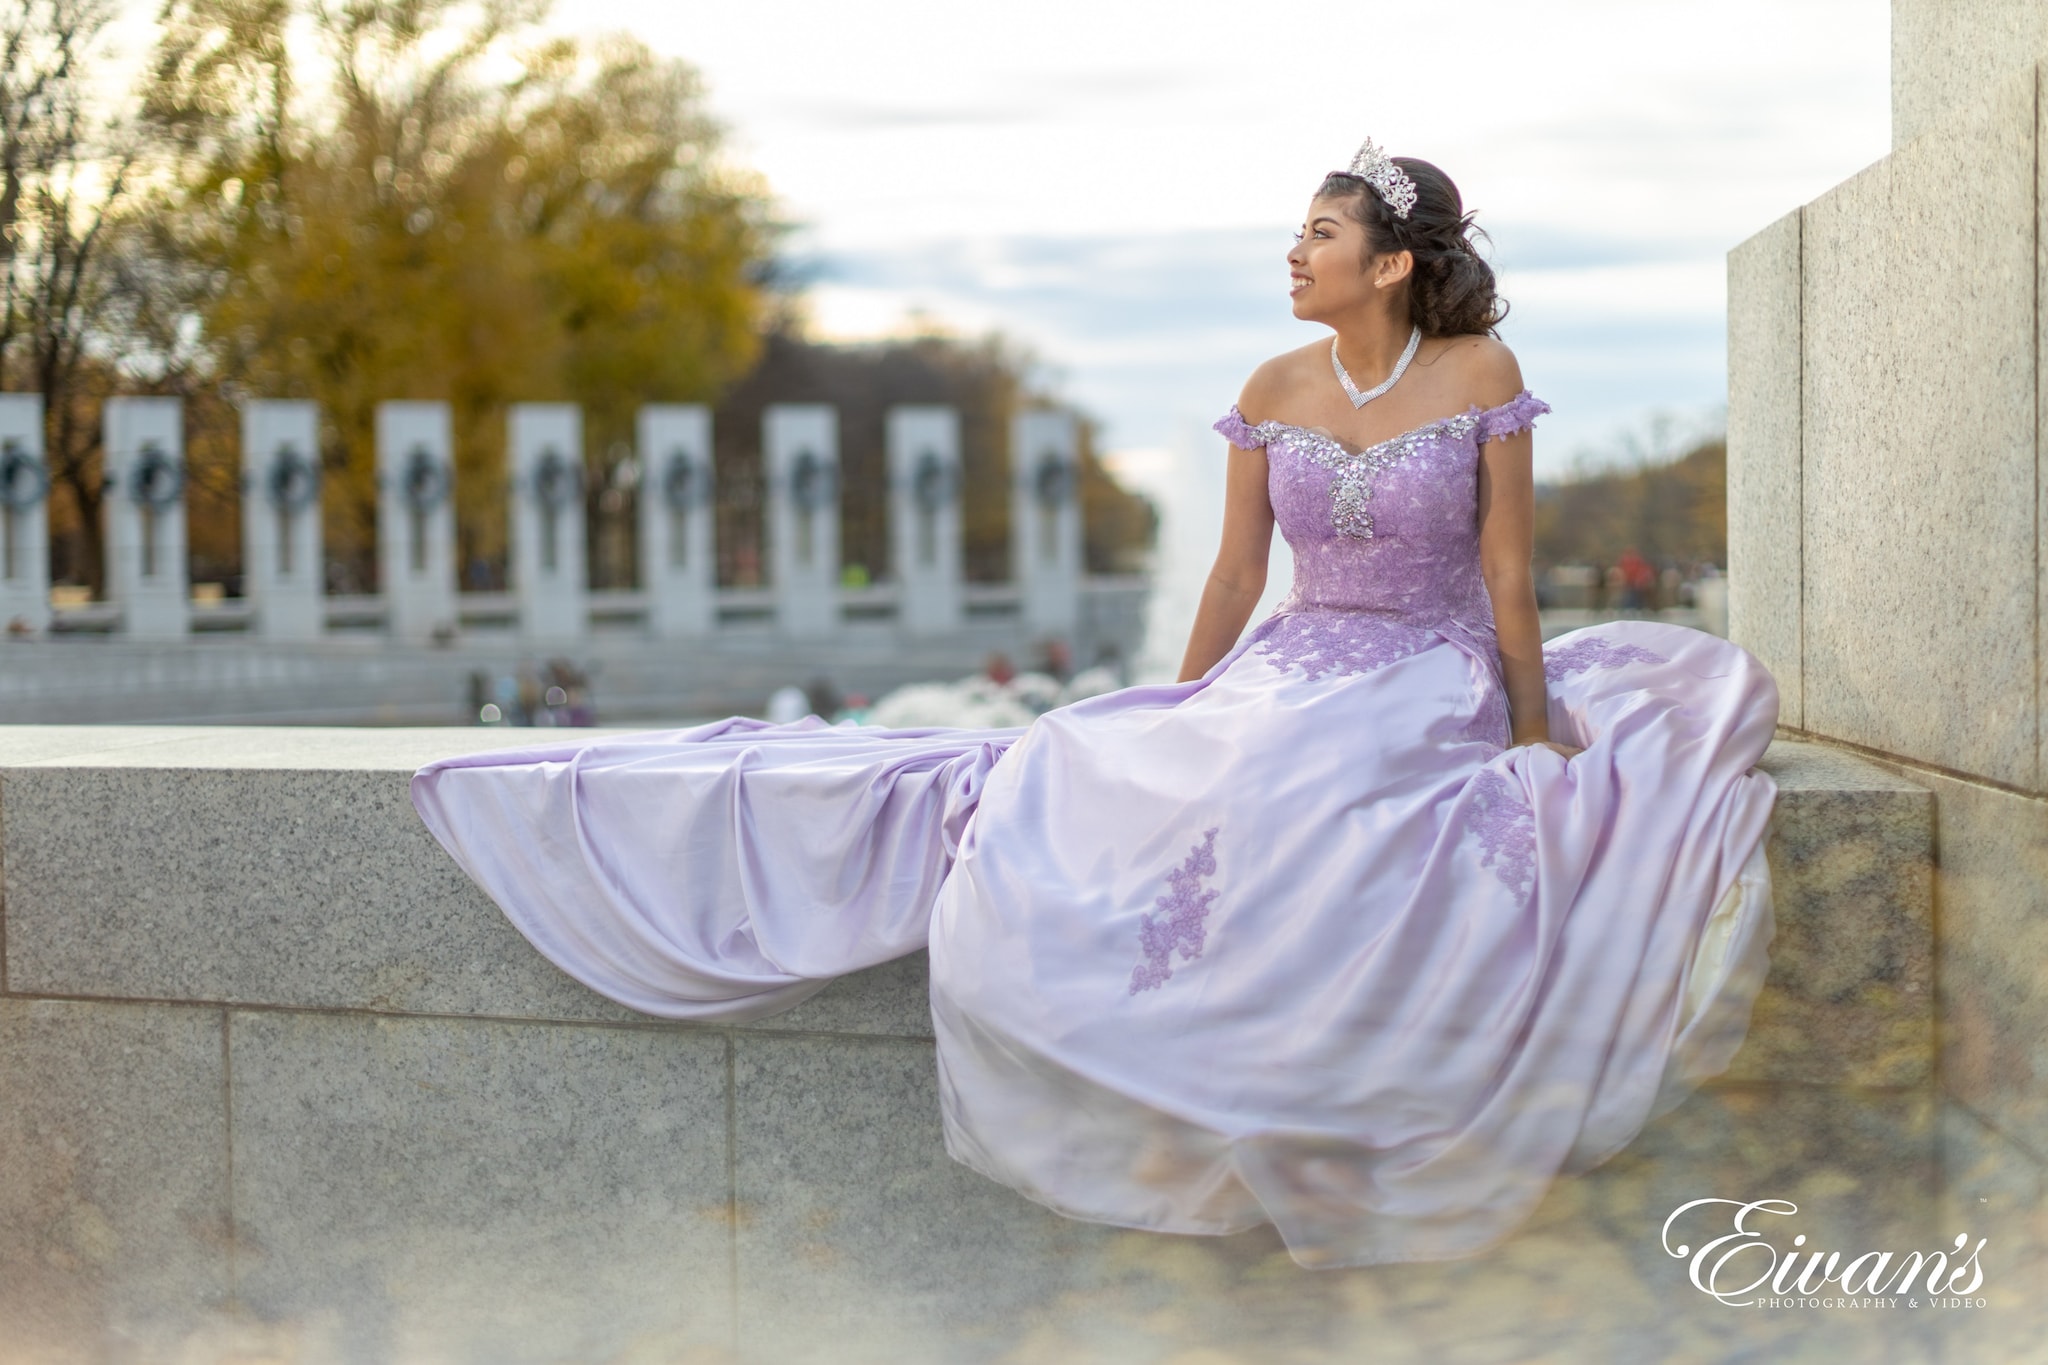 Princess Dress Pictures | Download Free Images on Unsplash